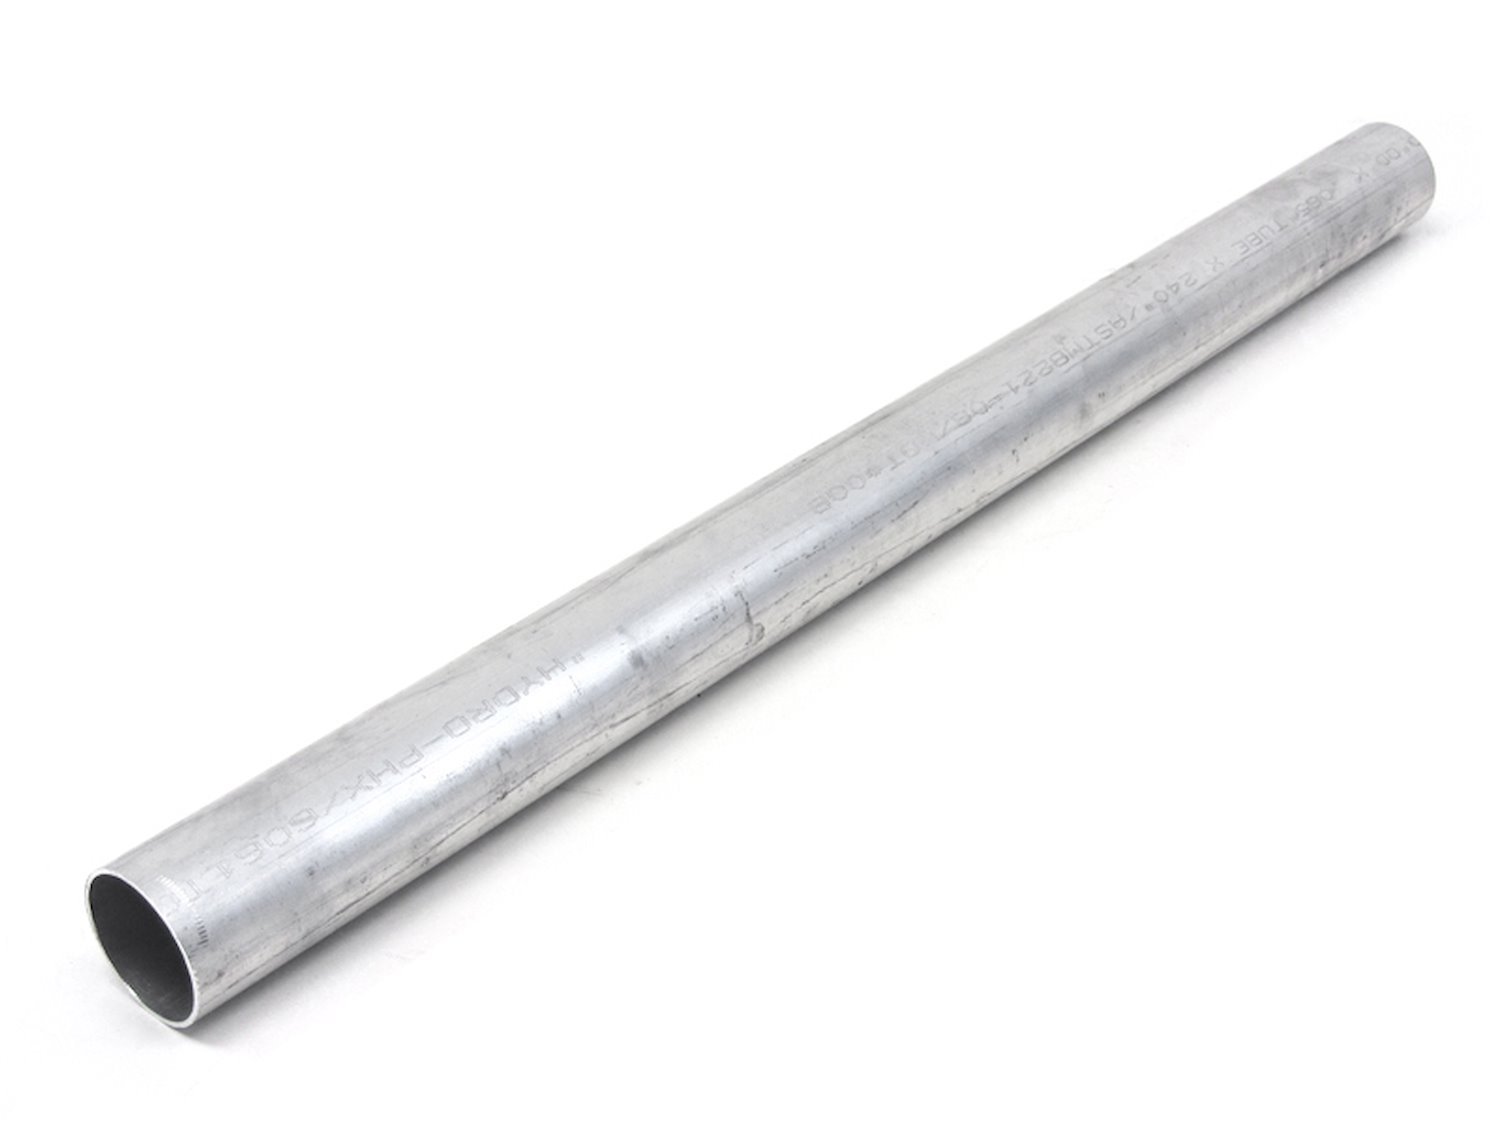 AST-3F-212 Aluminum Tubing, 6061 Aluminum, Straight Tubing, 2-1/8 in. OD, Seamless, Raw Finish, 3 ft. Long